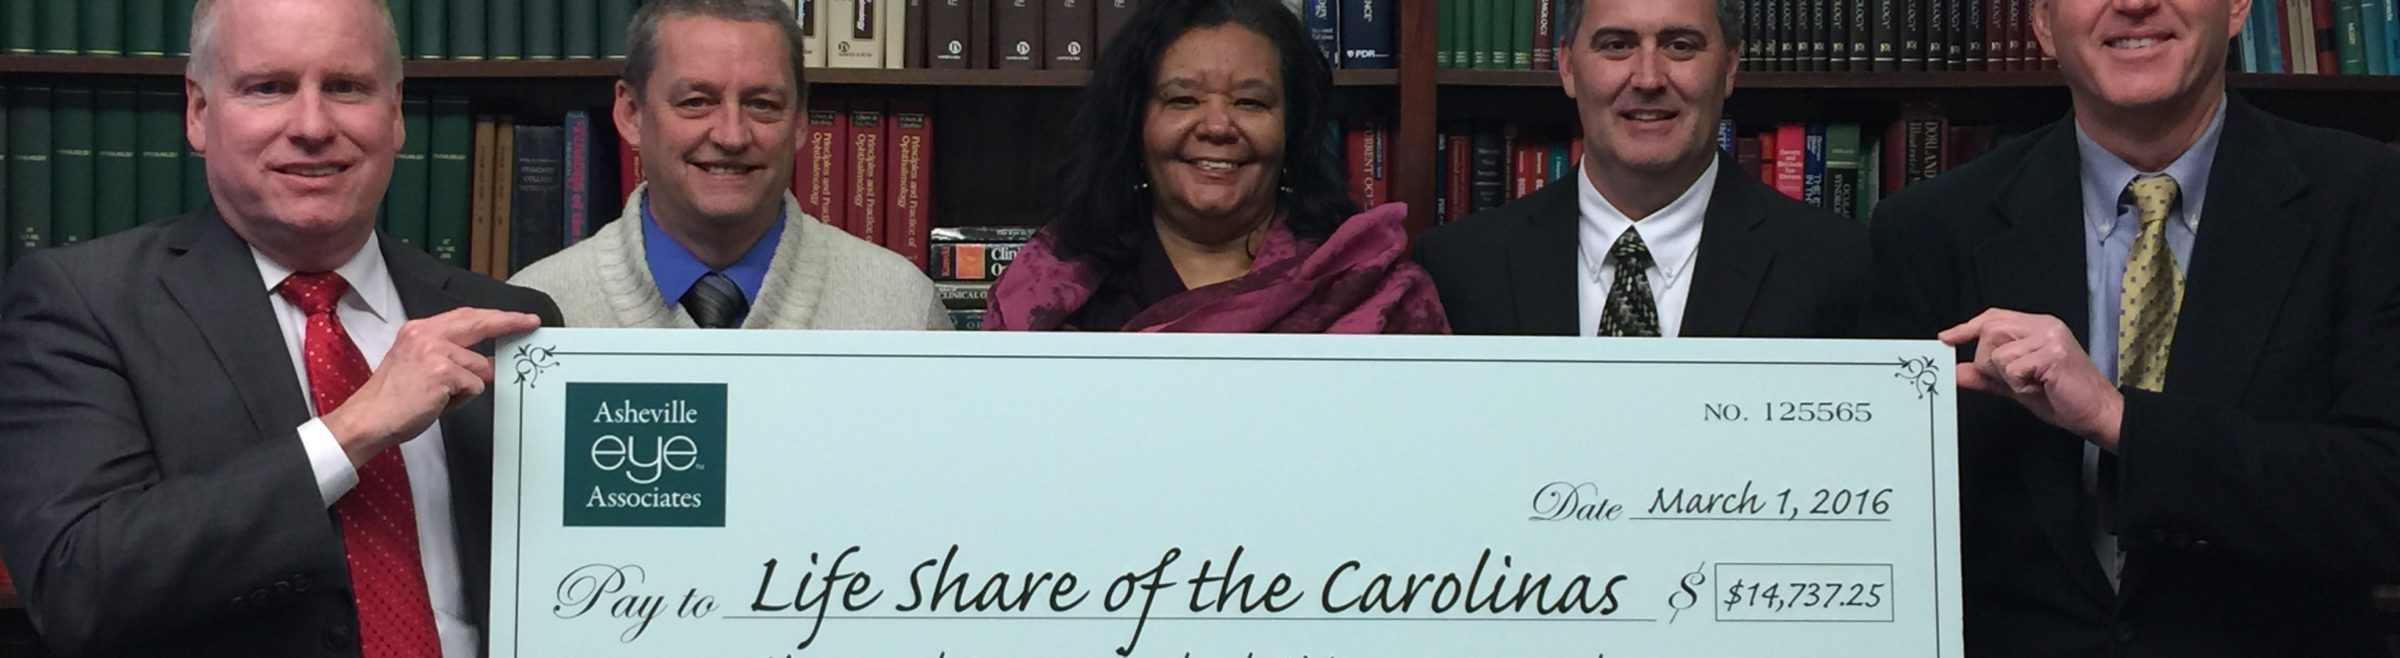 Asheville Eye Associates Presents nearly $15K to LifeShare of the Carolinas